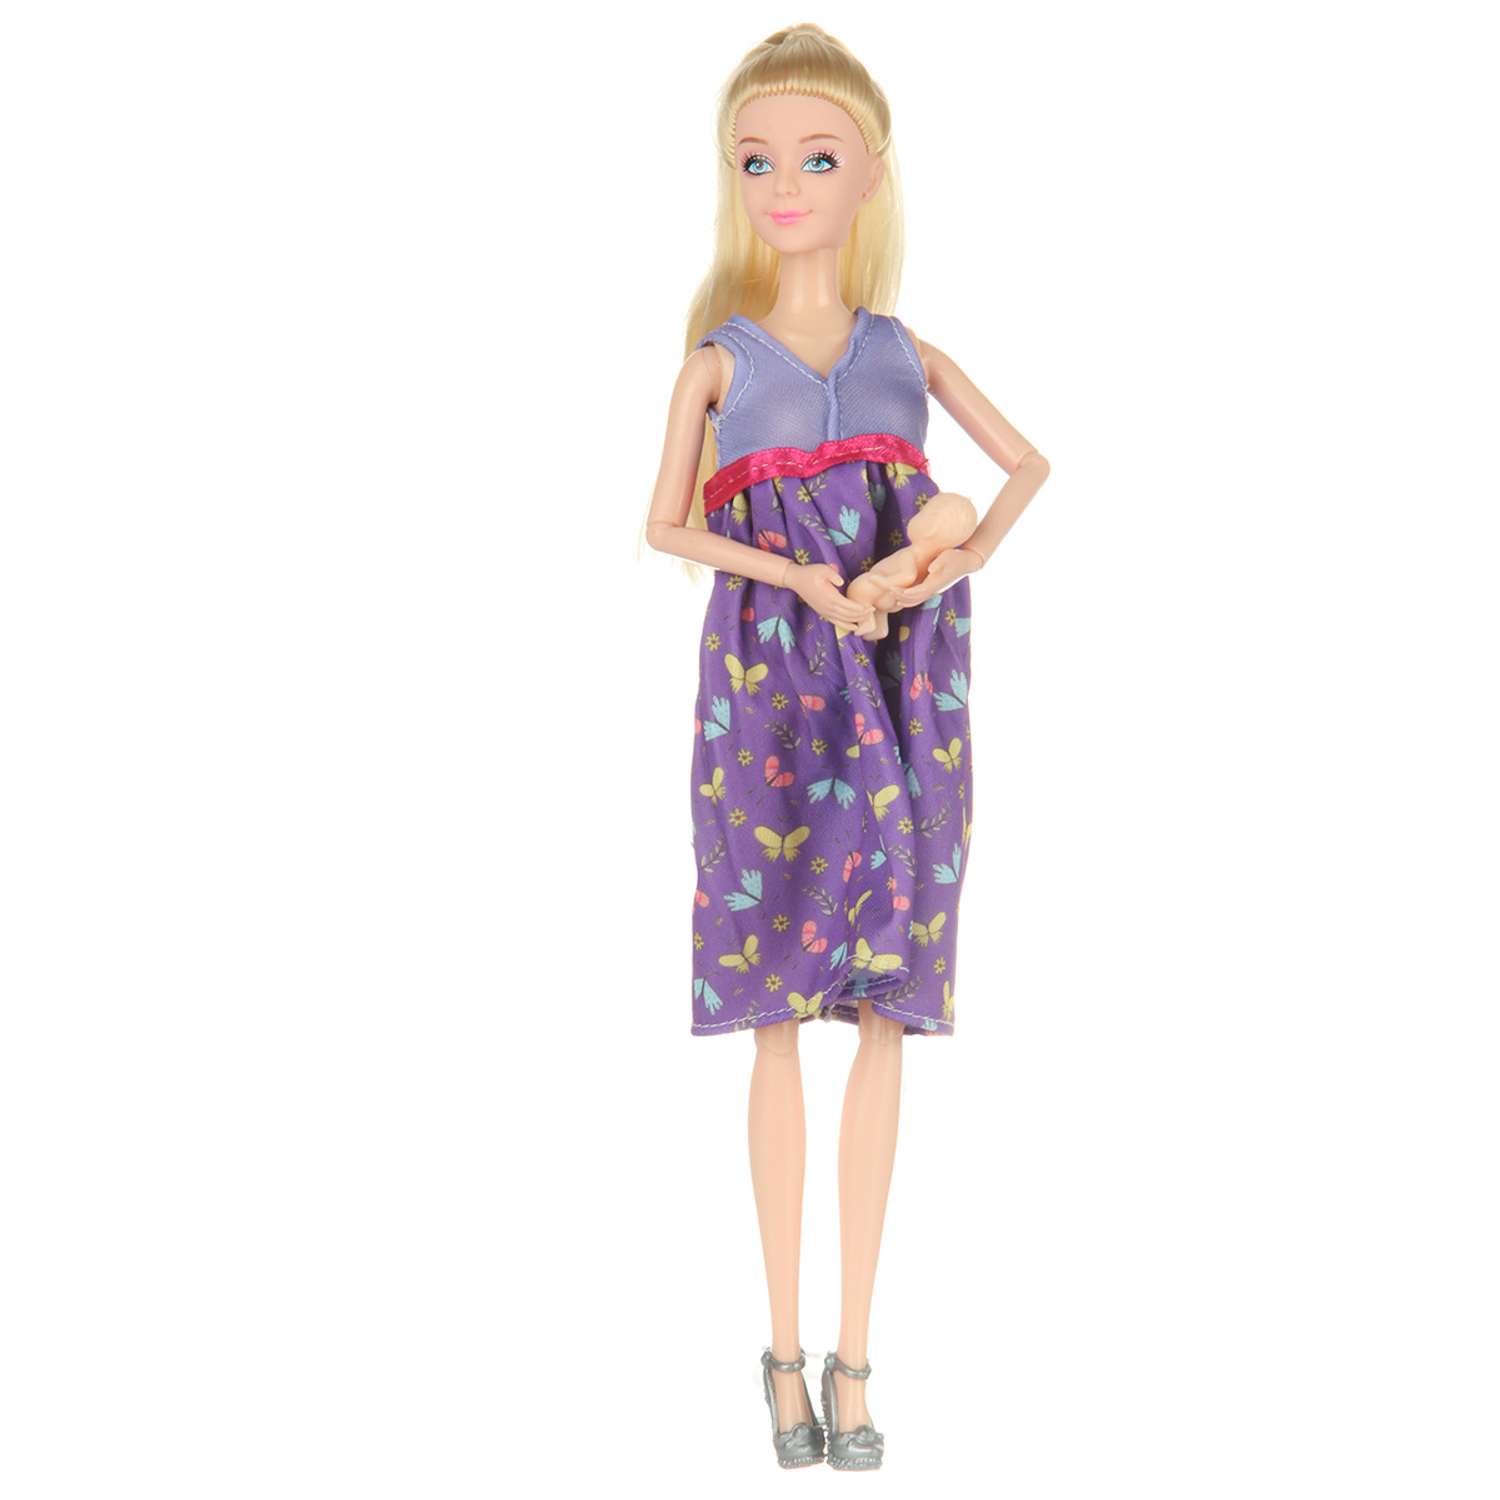 Кукла модель Барби Veld Co будущая мама 132274 - фото 9